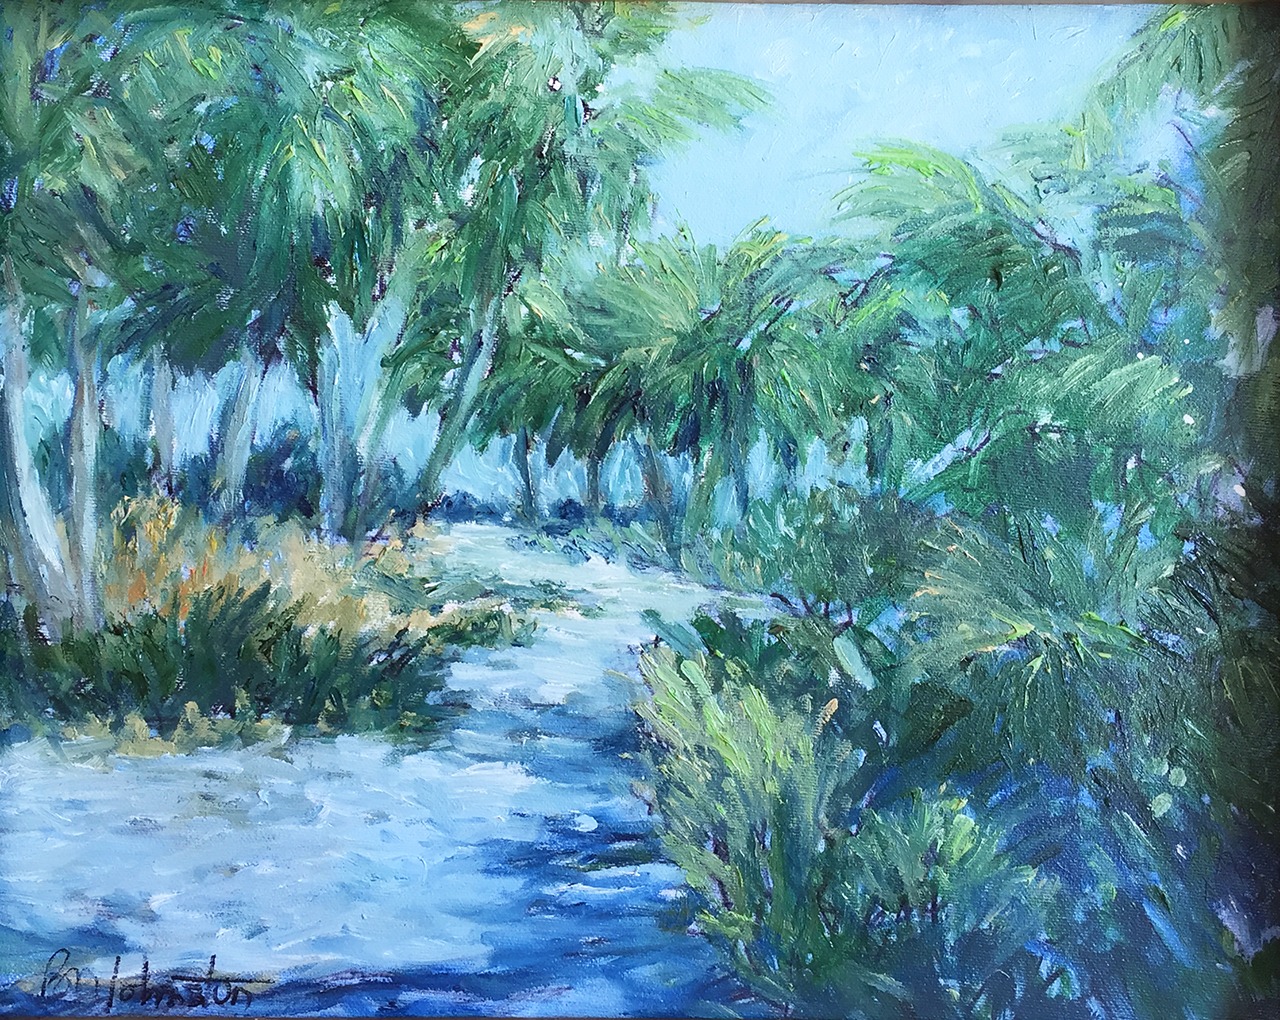 Beach Trail - Brian M. Johnston - North American Impressionist Artist - oil on canvas - 11" x 14" - US$ 800.